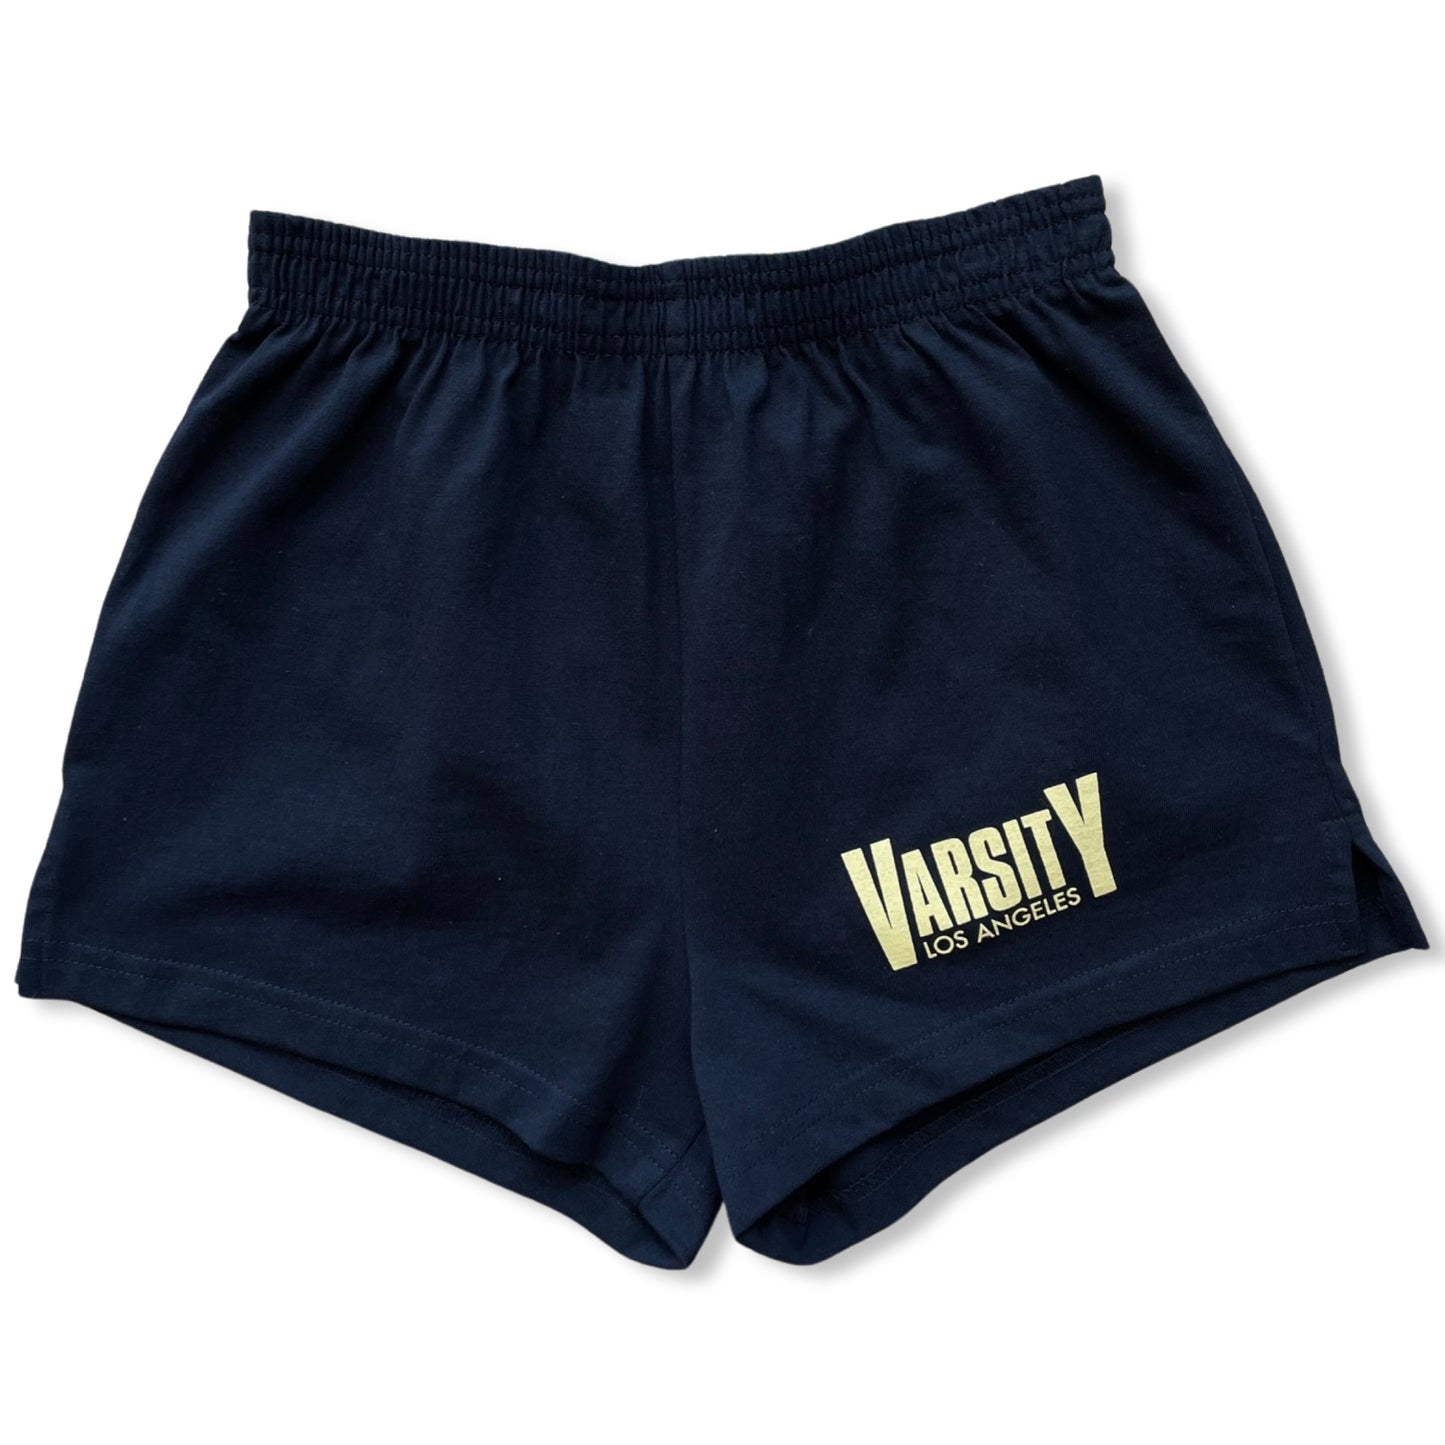 Varsity Los Angeles Cheer Shorts Black